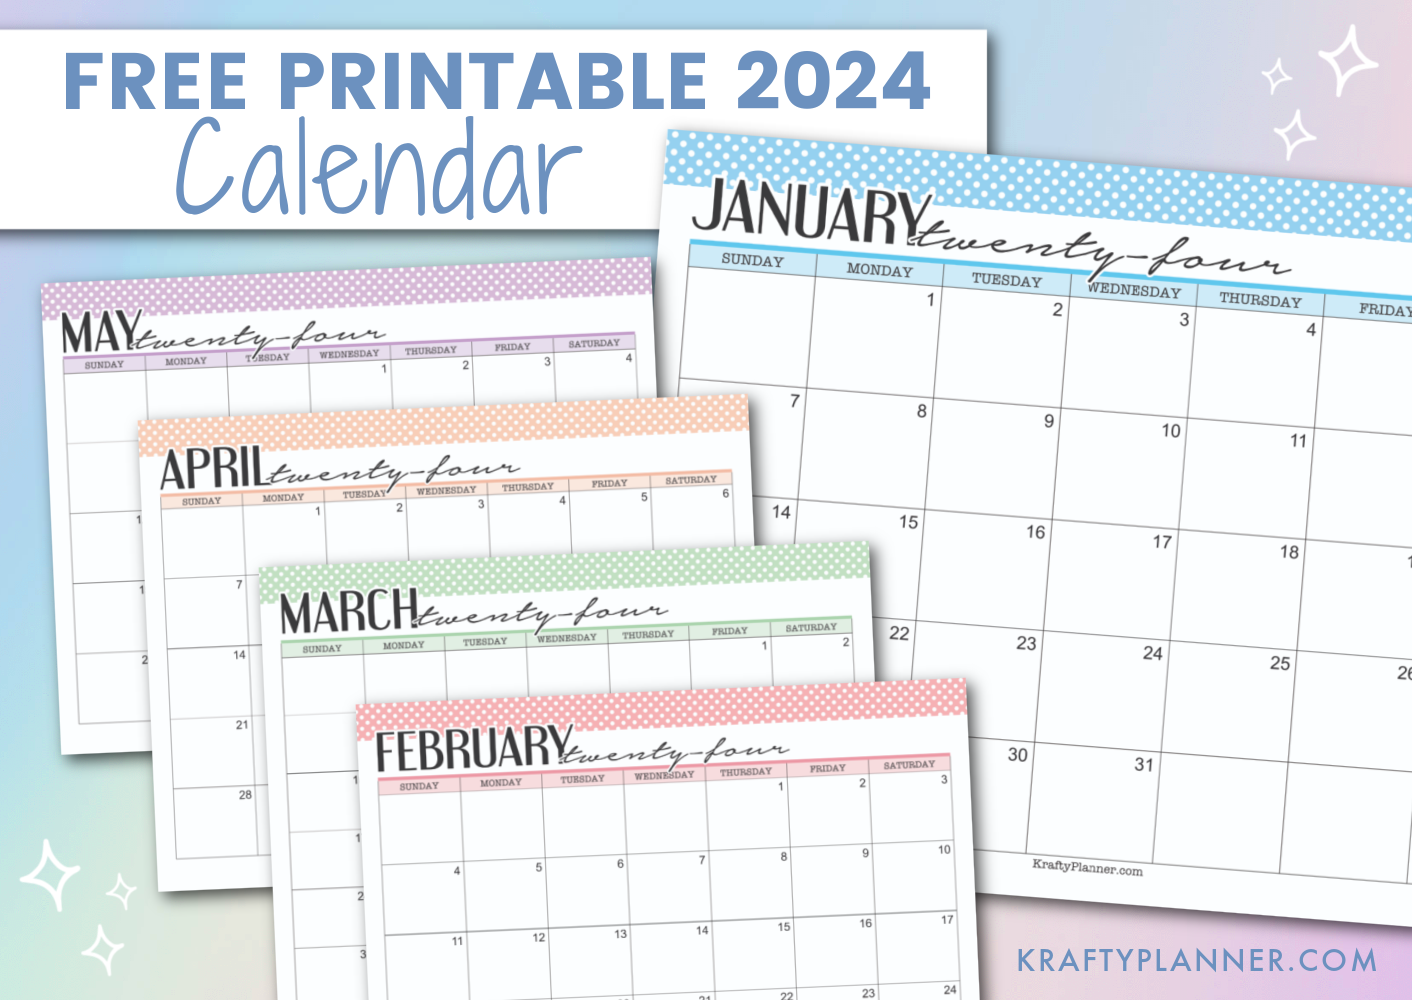 Free Printable 2024 Calendars (Color) — Krafty Planner throughout Free Printable Calendar 2024 A5